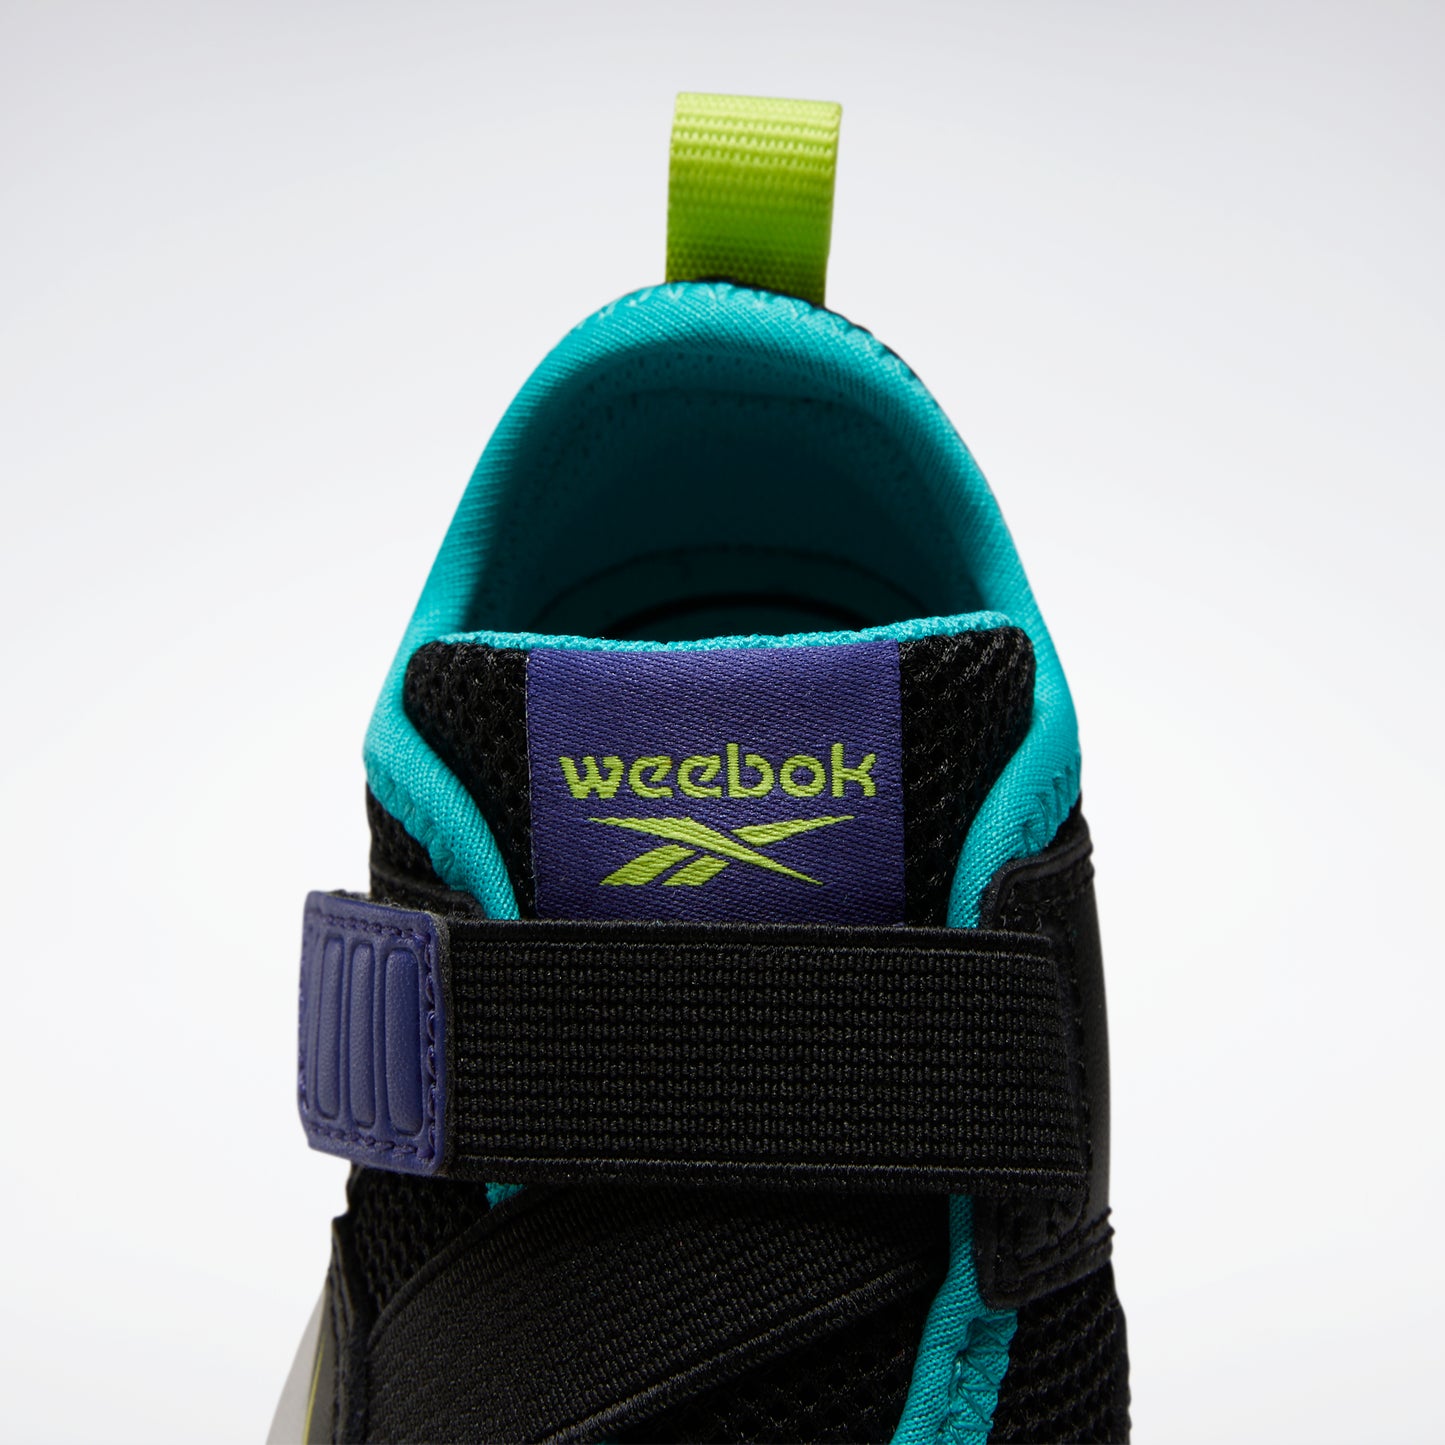 Reebok Footwear Kids Weebok Flex Sprint Shoes Infant Black/Pugry2/Clatea